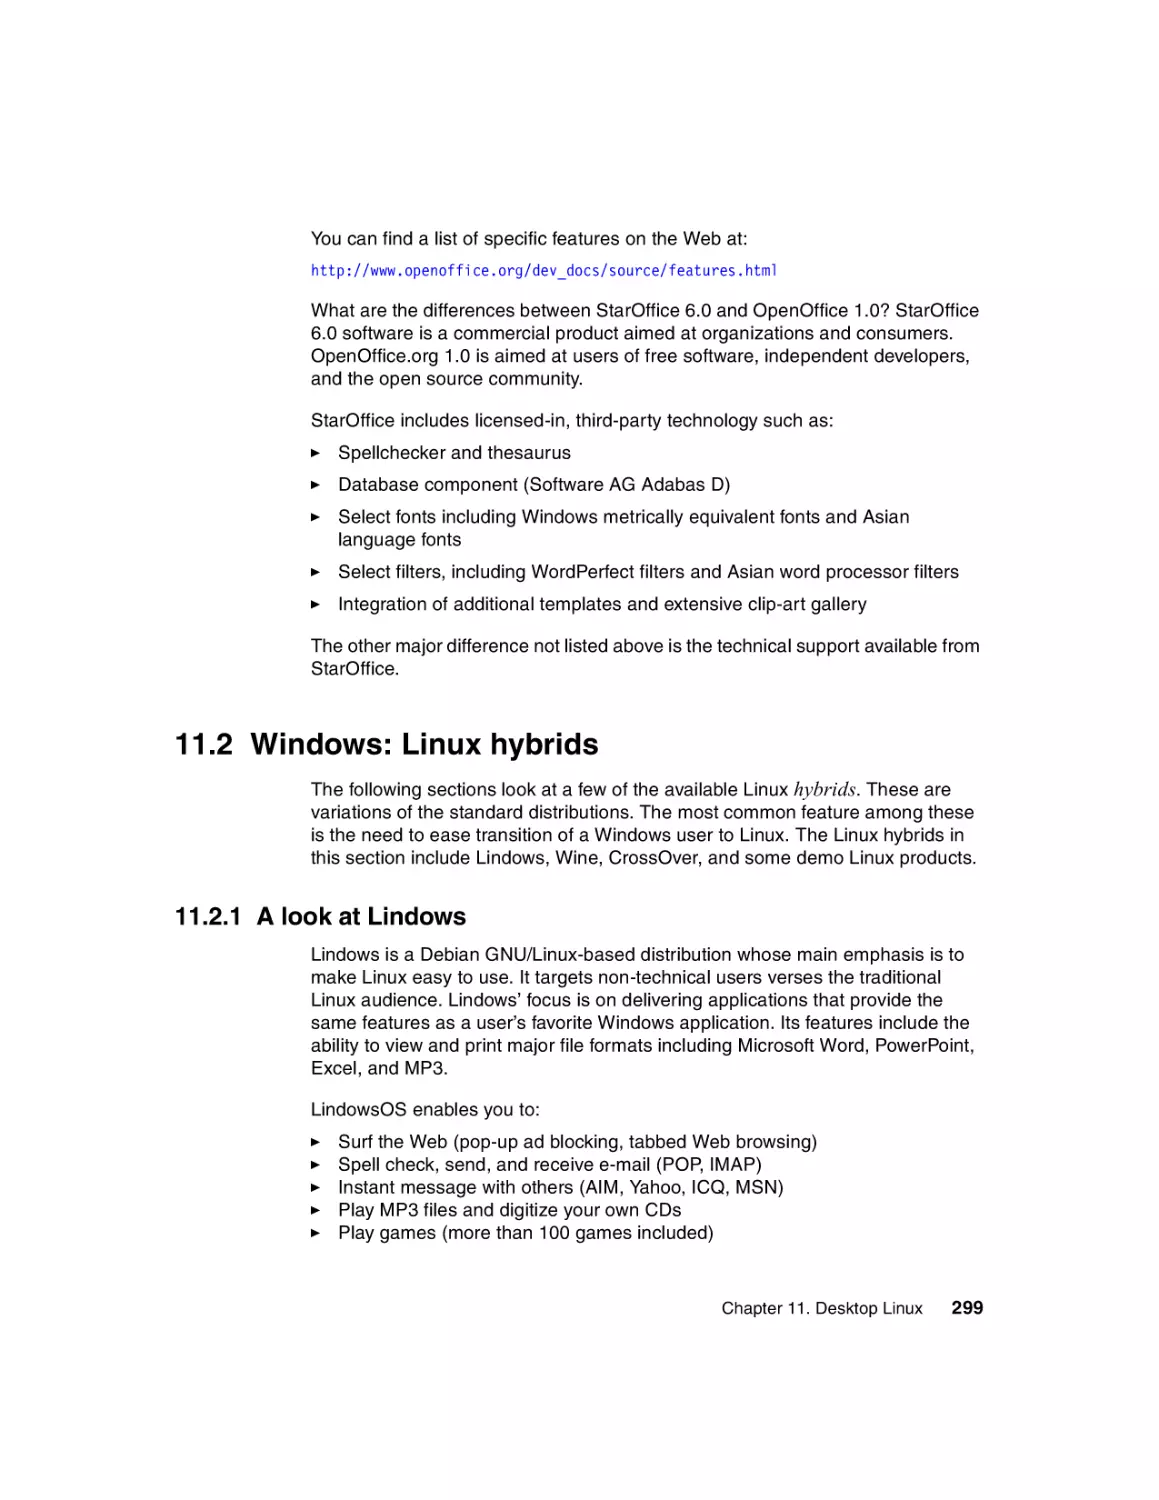 11.2 Windows
11.2.1 A look at Lindows